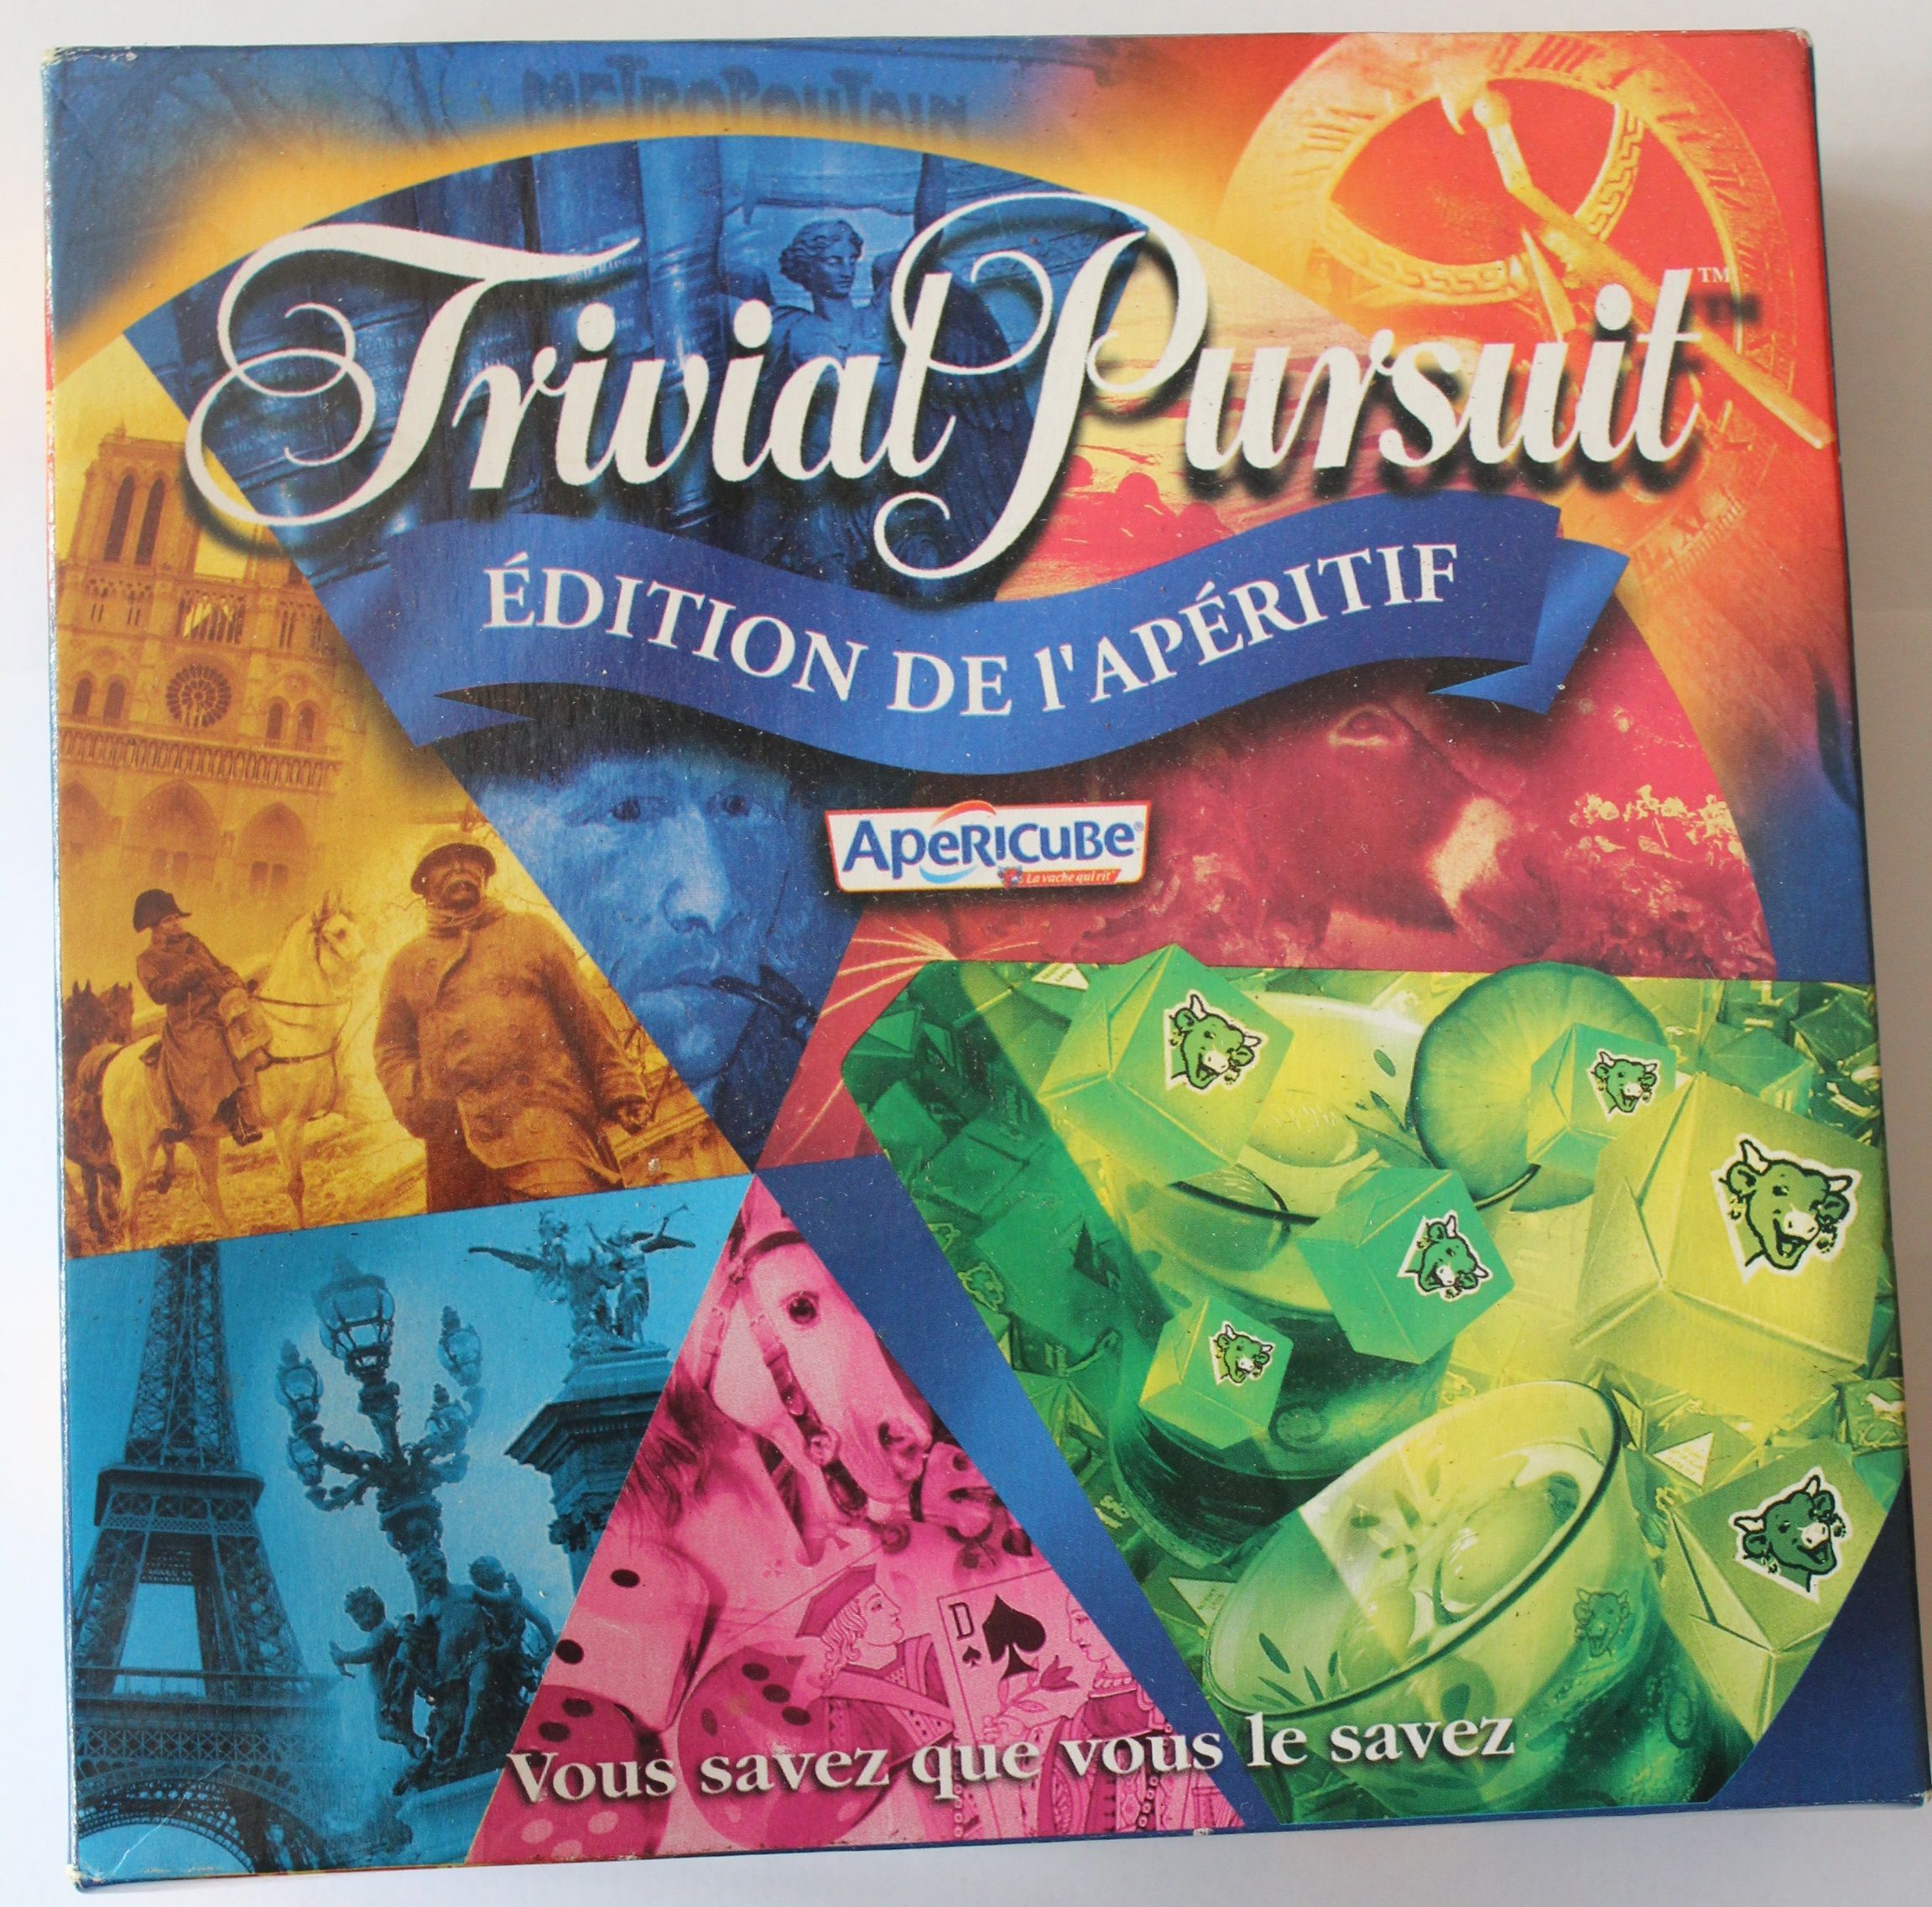 Trivial Pursuit: Edition de l'apéritif Apéricube